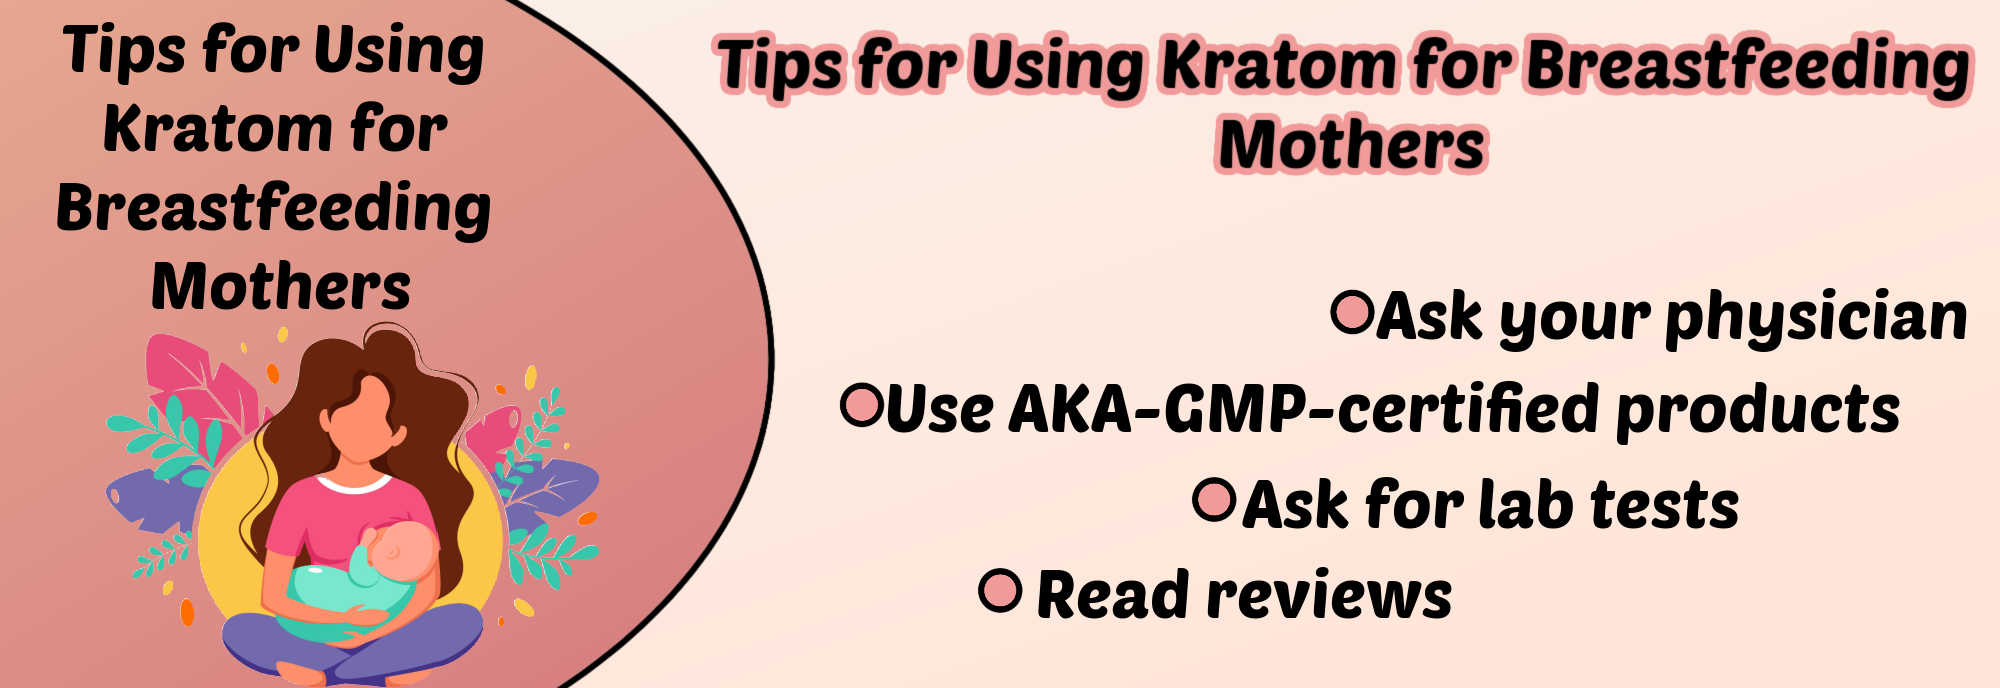 image of tips for using kratom for breastfeeding mothers